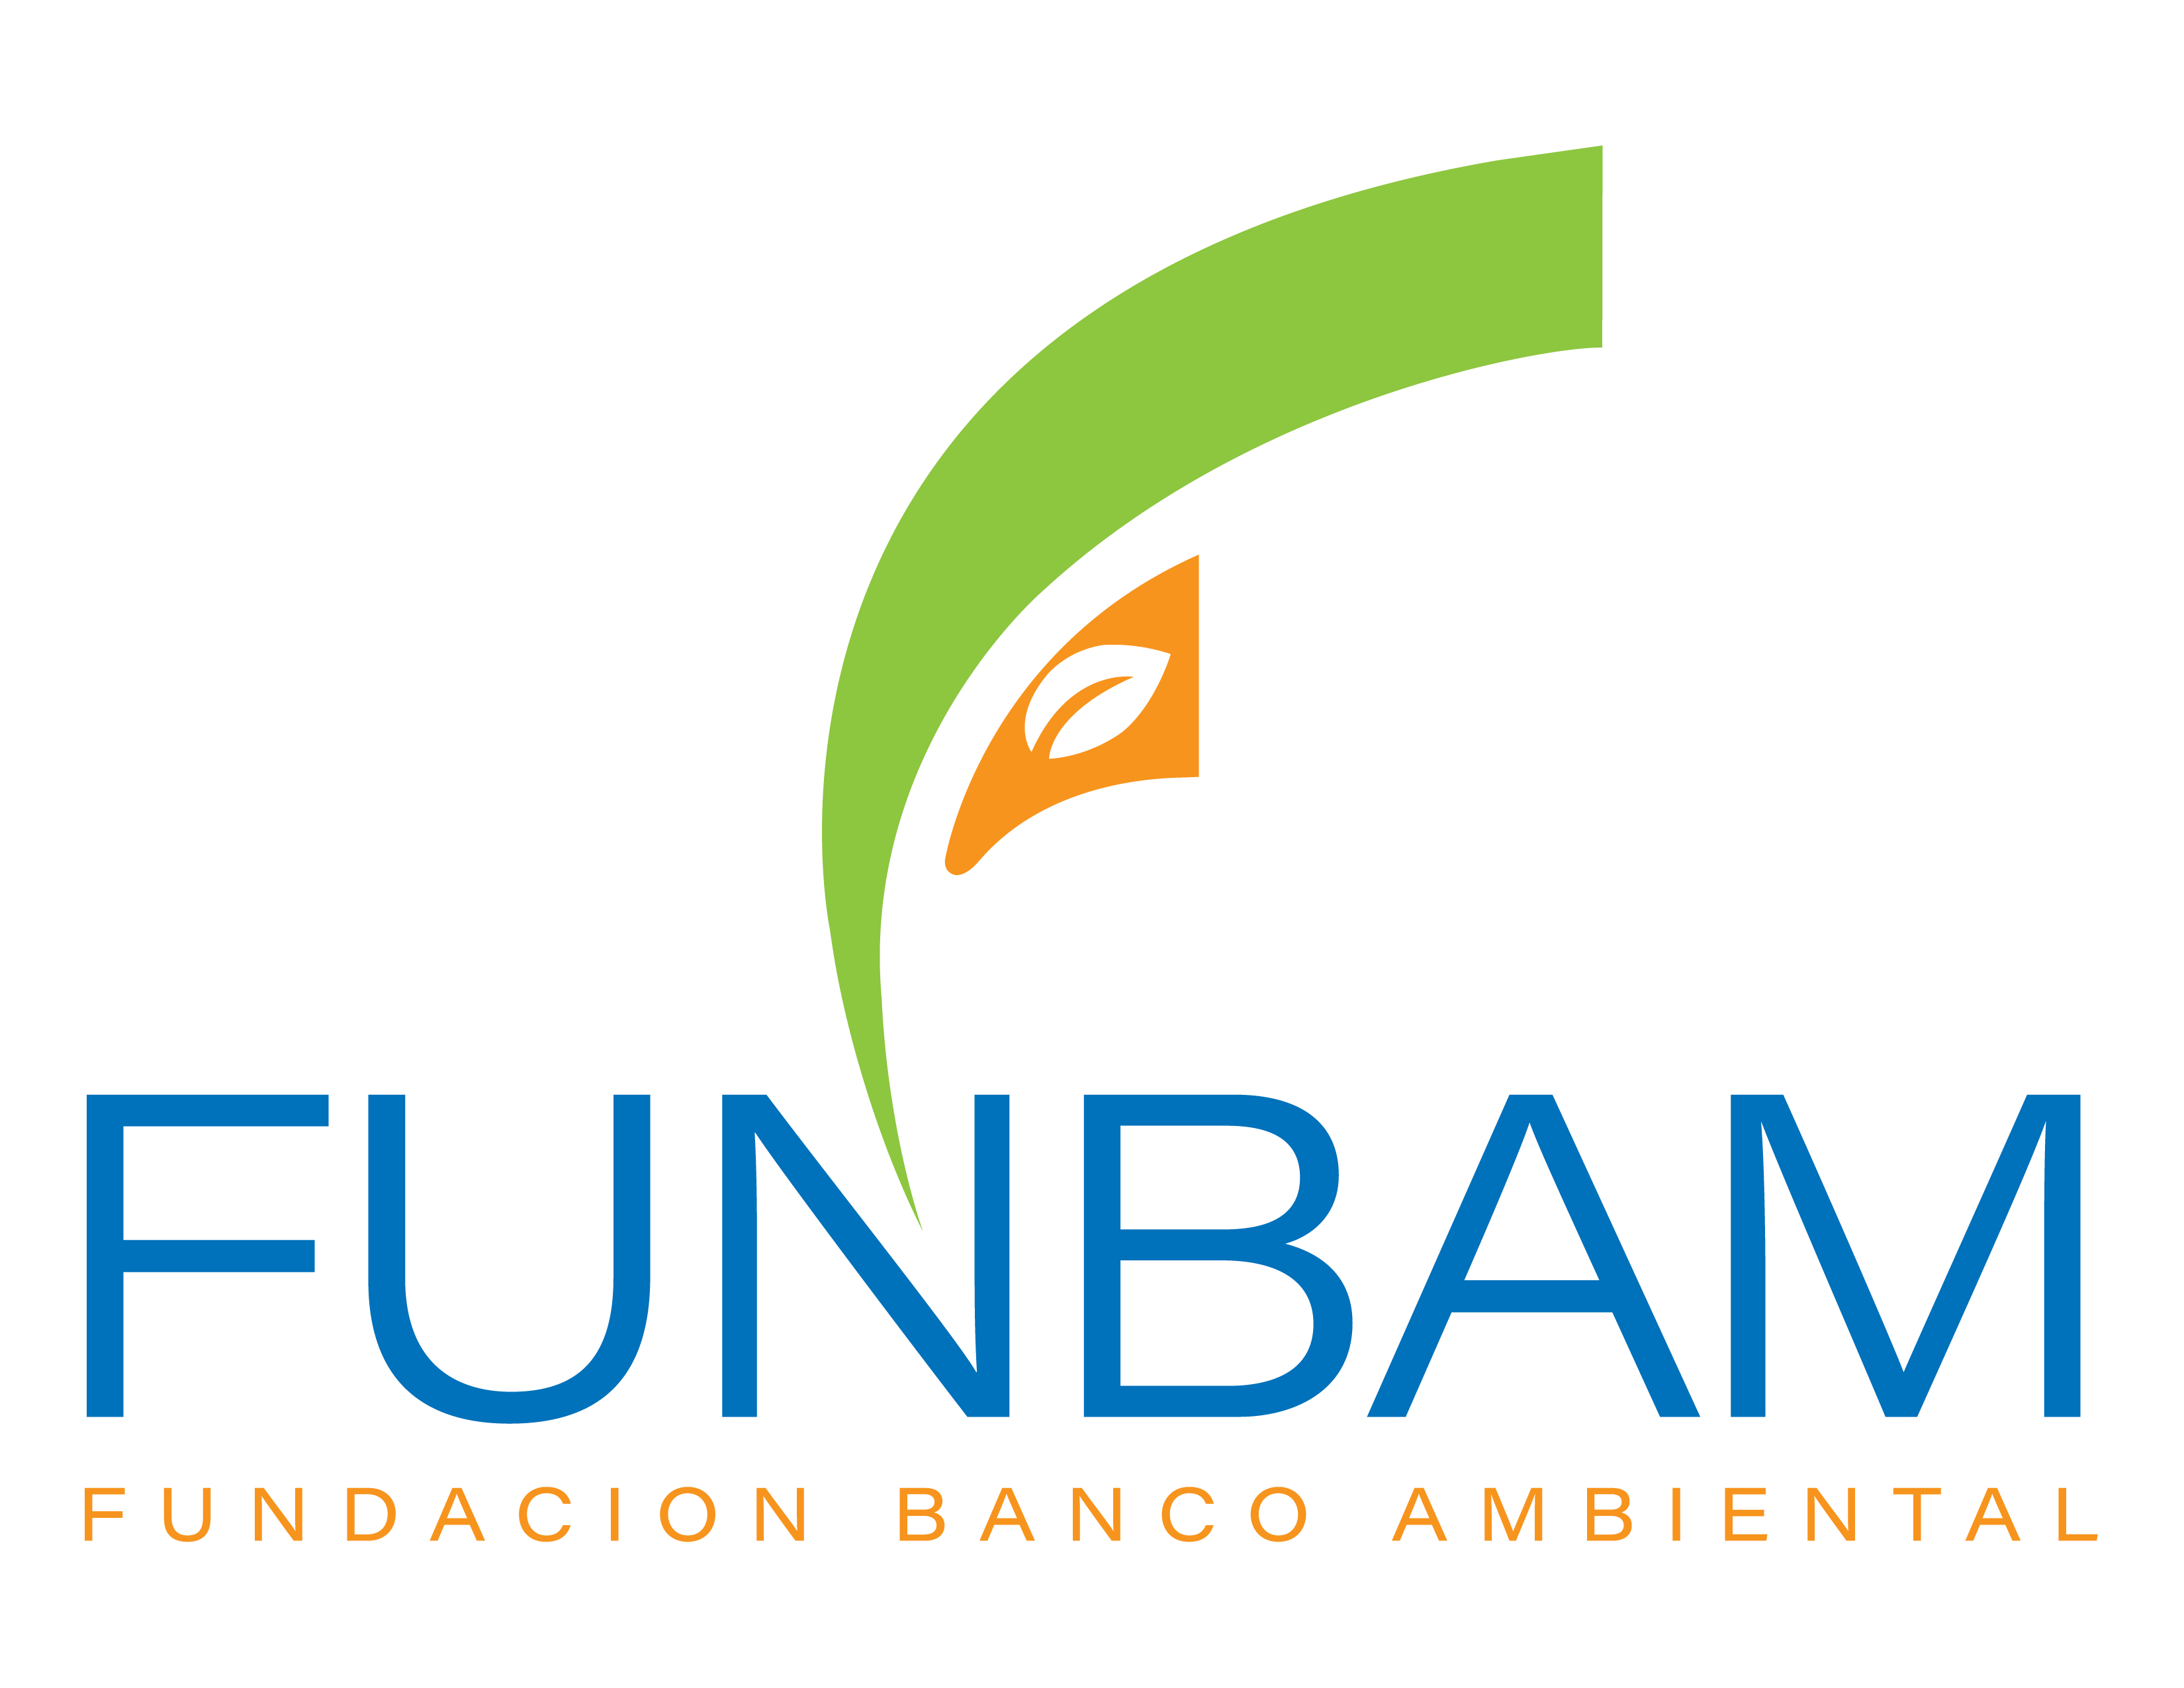 FUNBAM logo